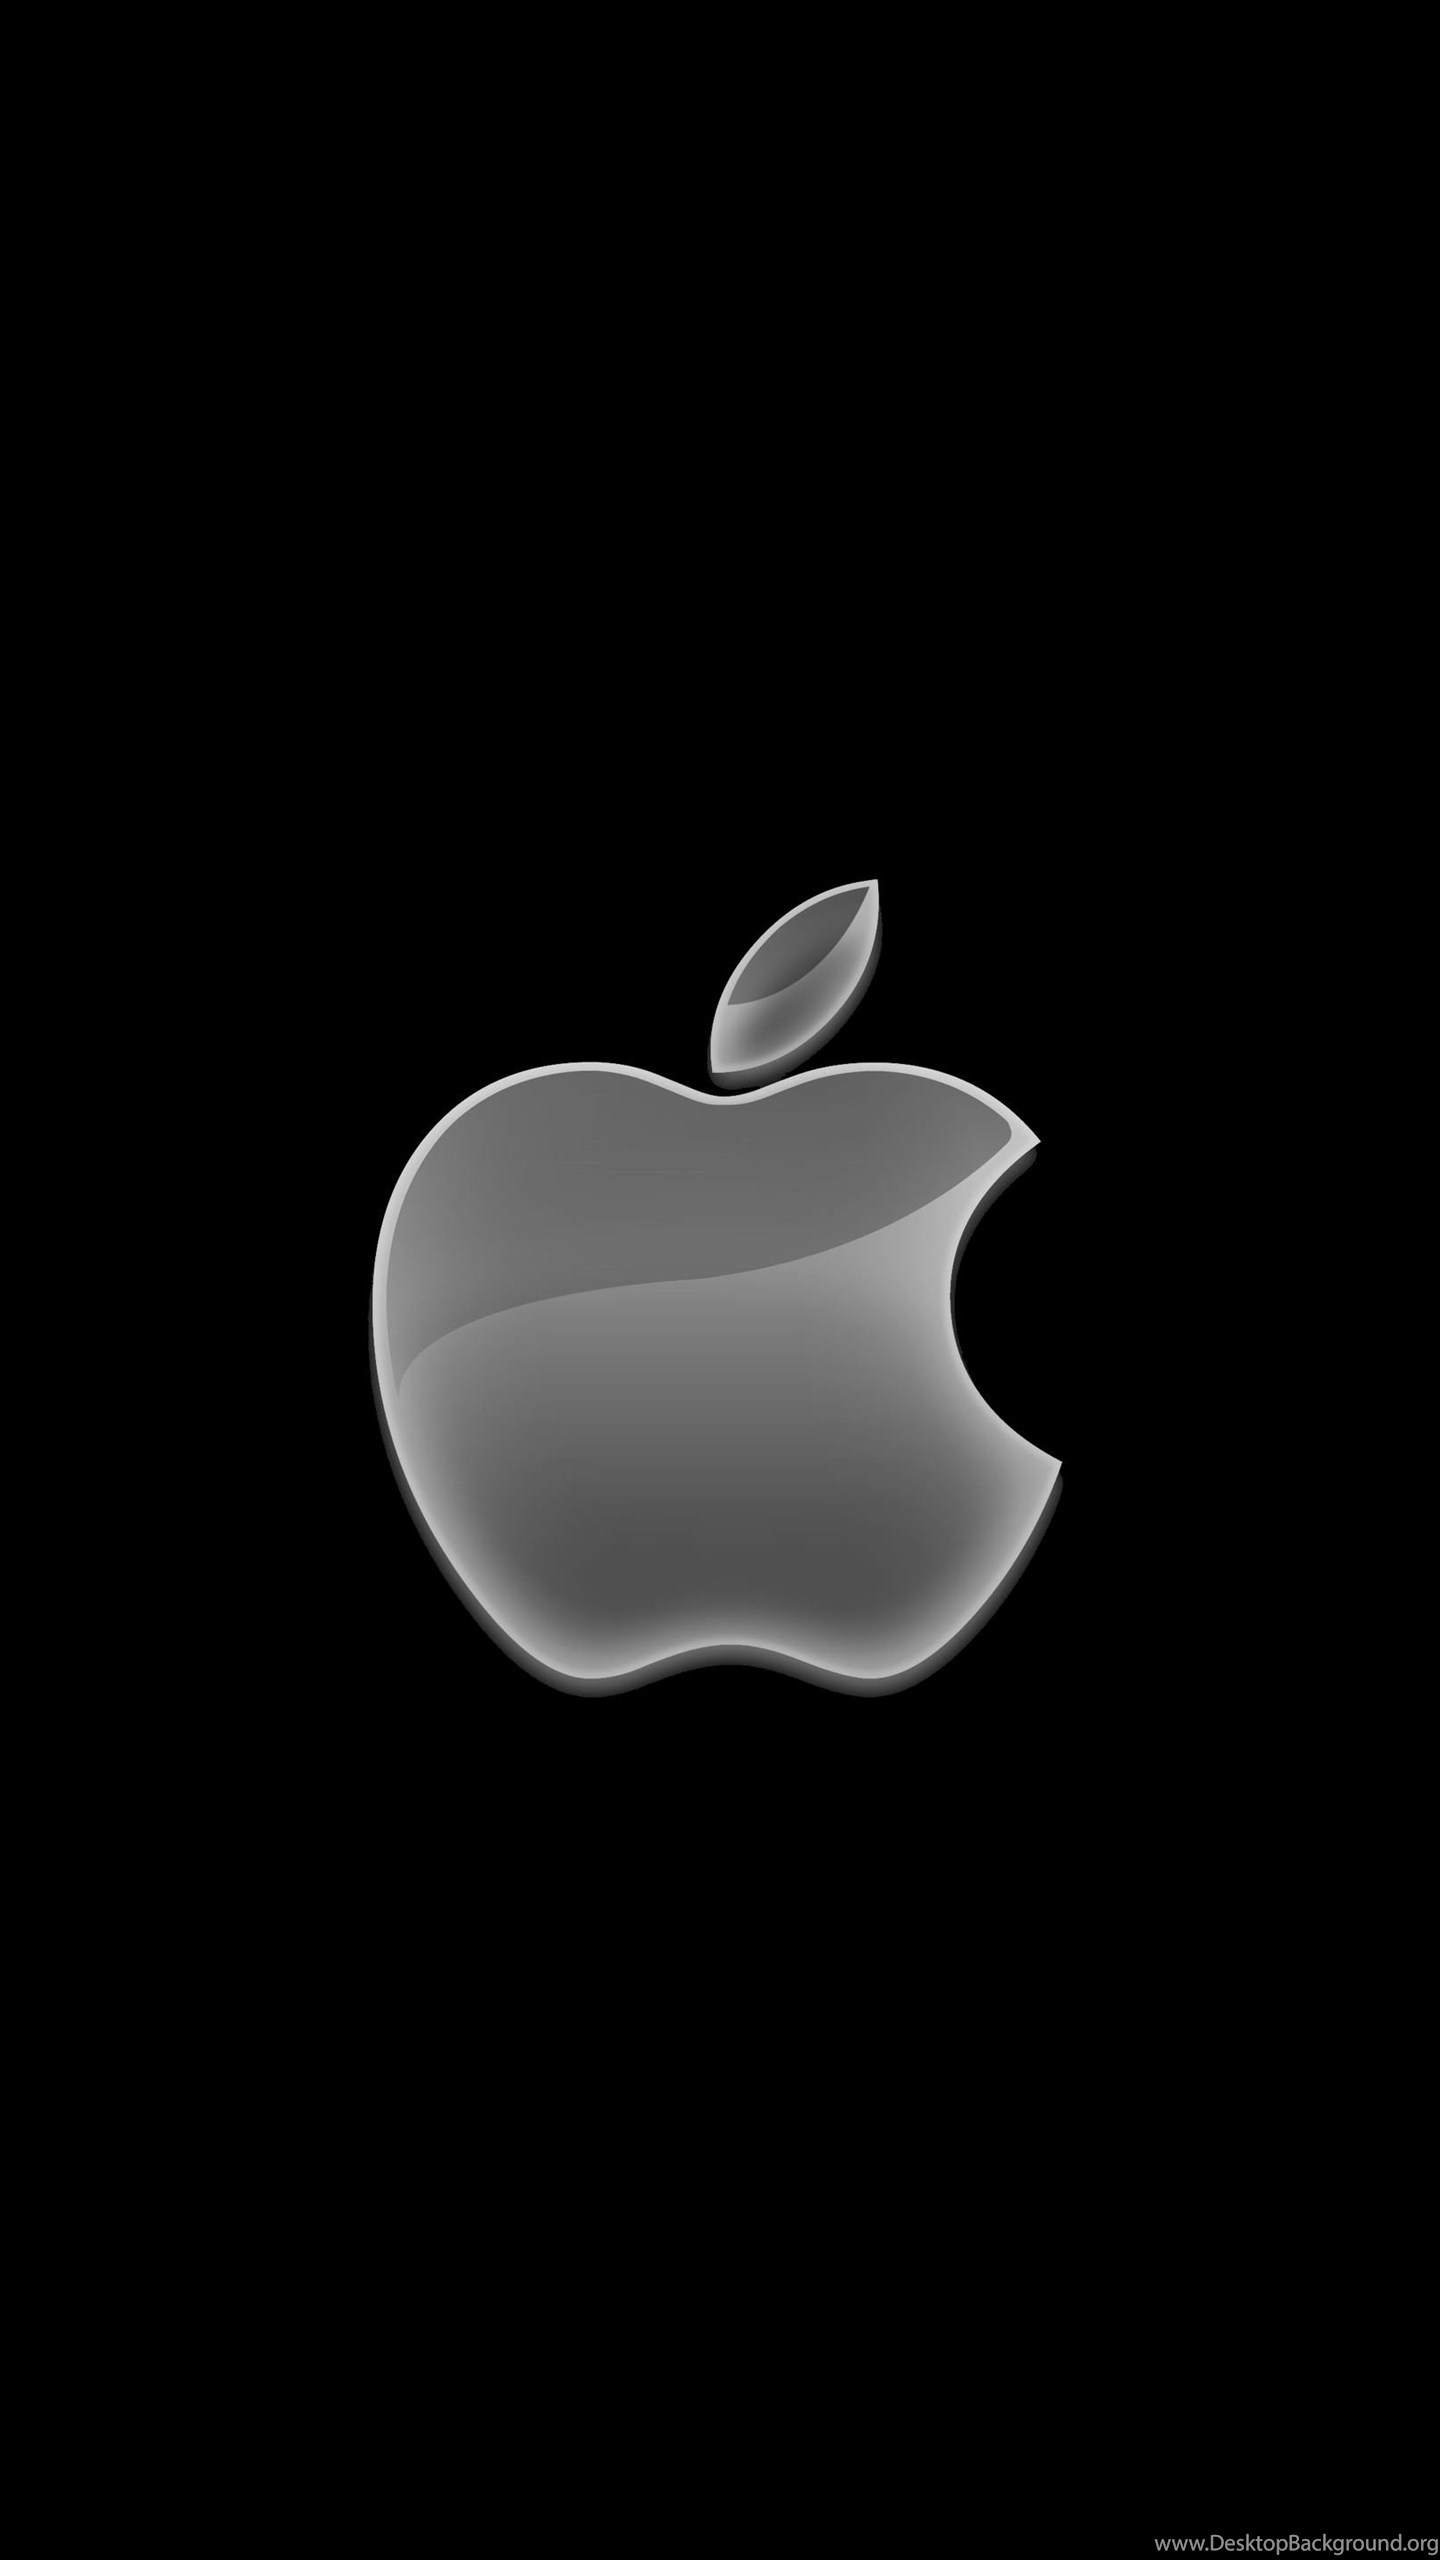 Лучший apple iphone. Apple айфон 7. Логотип Apple. Заставка на айфон. Заставка на айфон оригинальная.